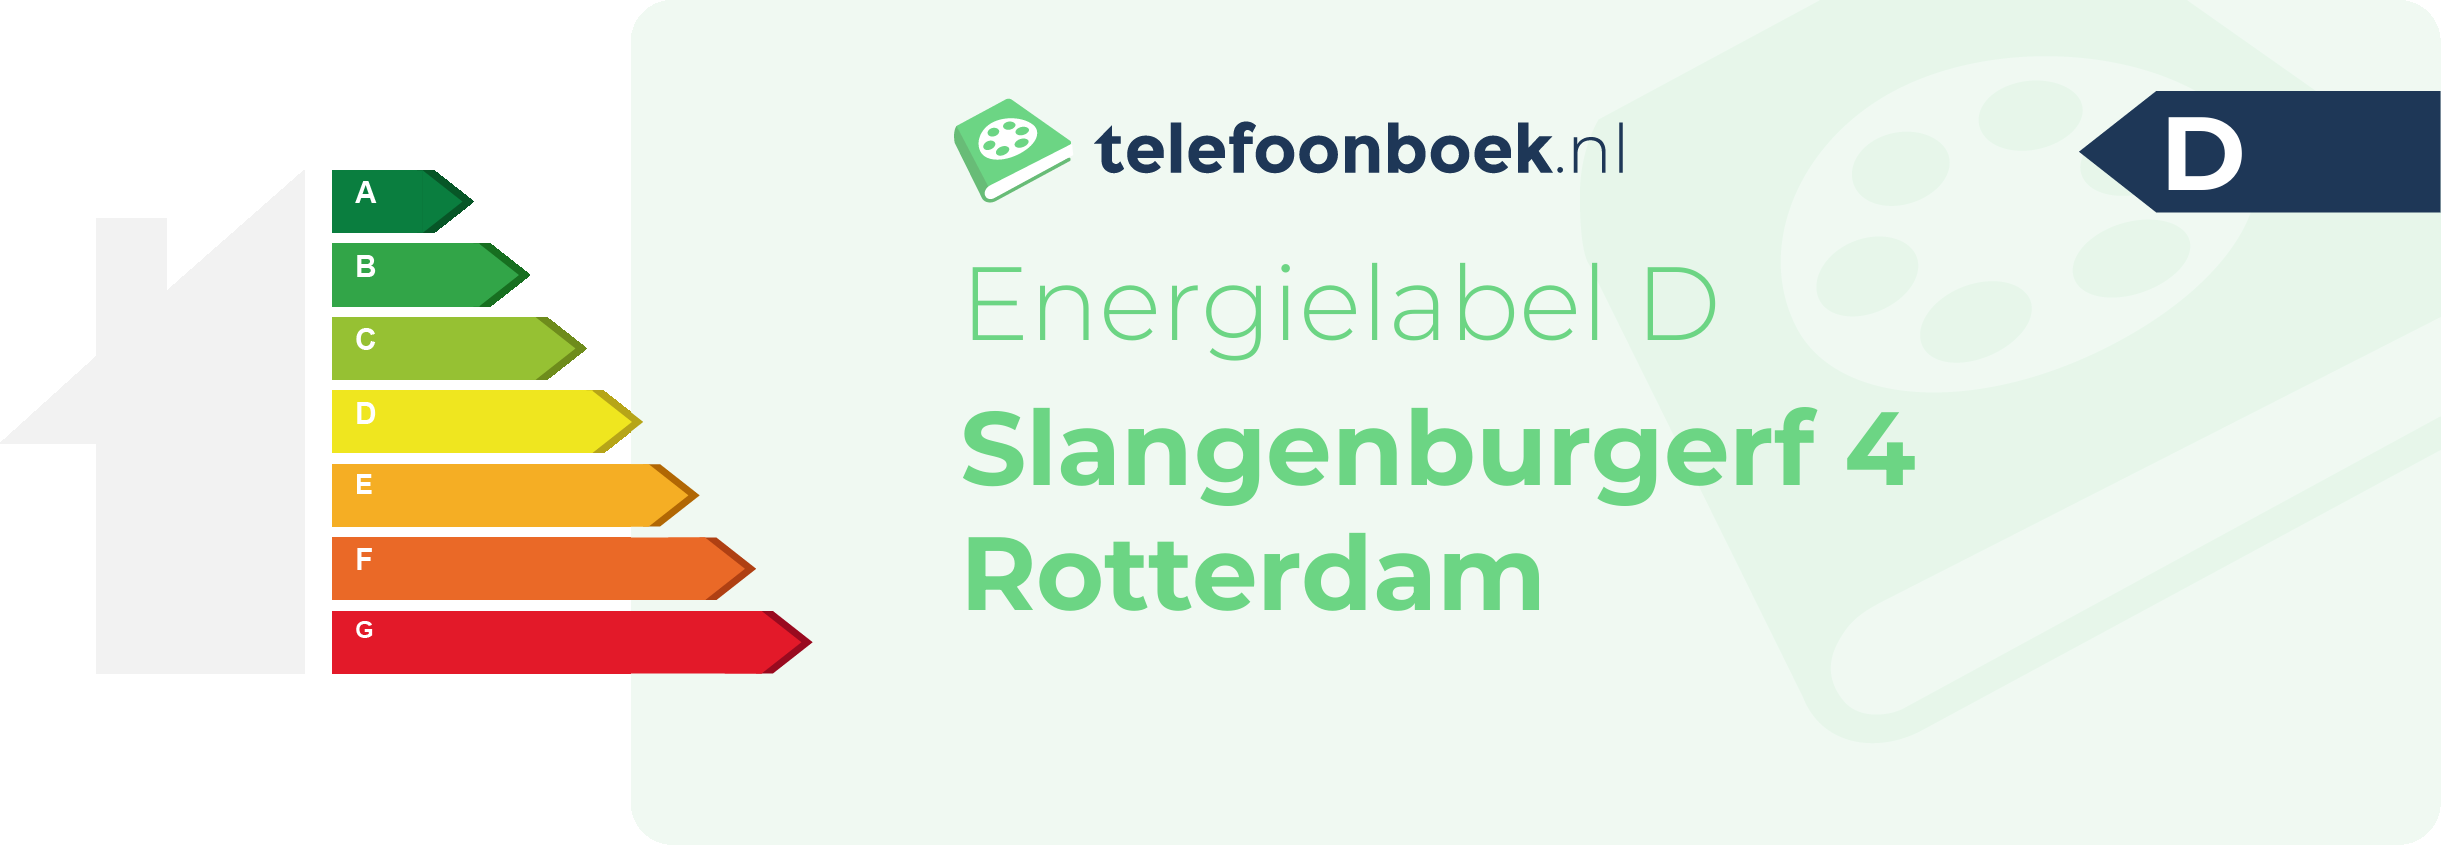 Energielabel Slangenburgerf 4 Rotterdam